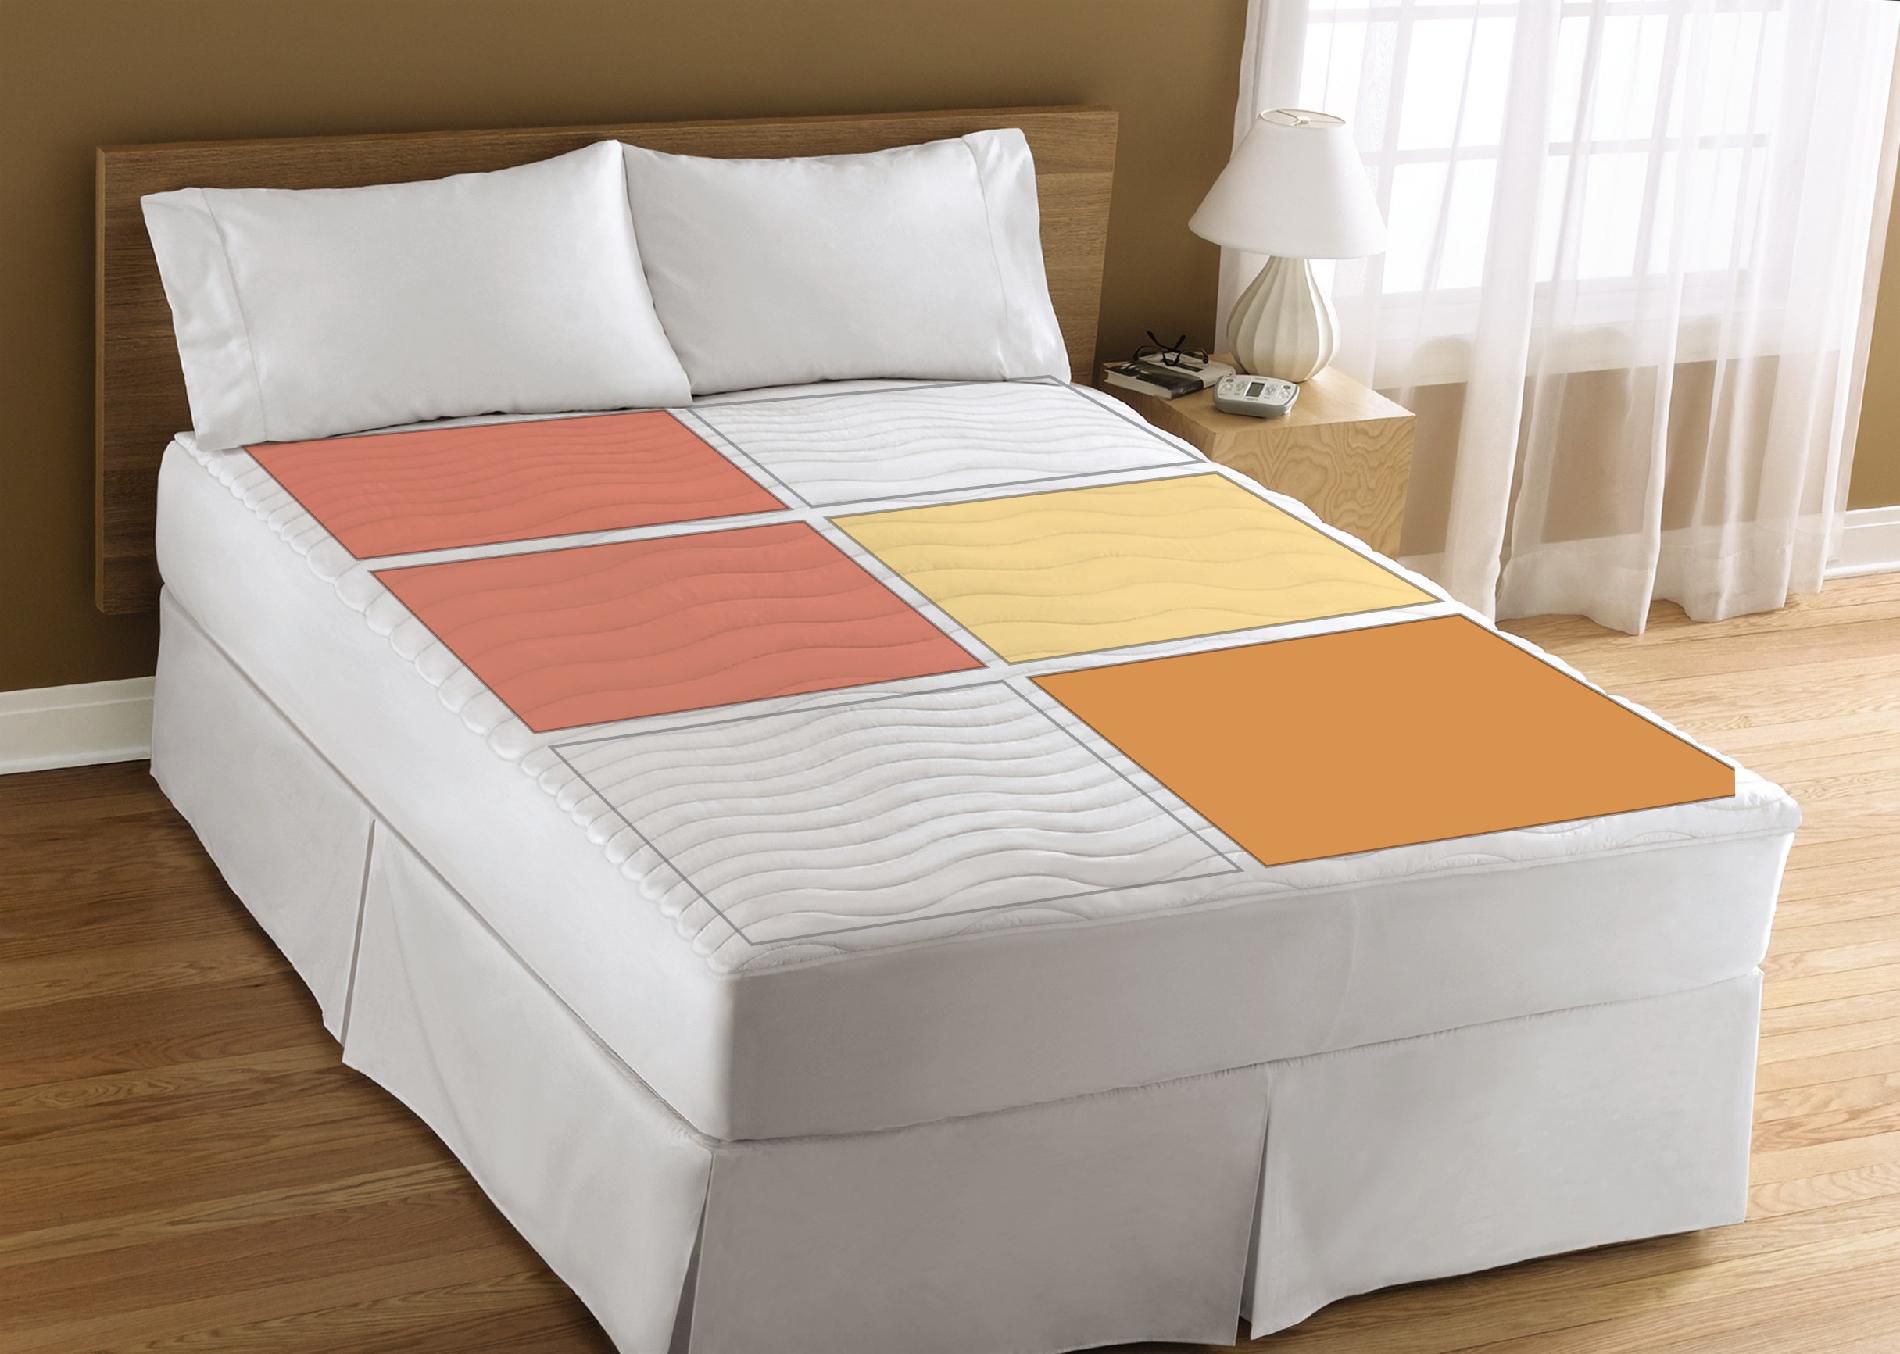 sunbeam heated mattress pad queen troubleshooting